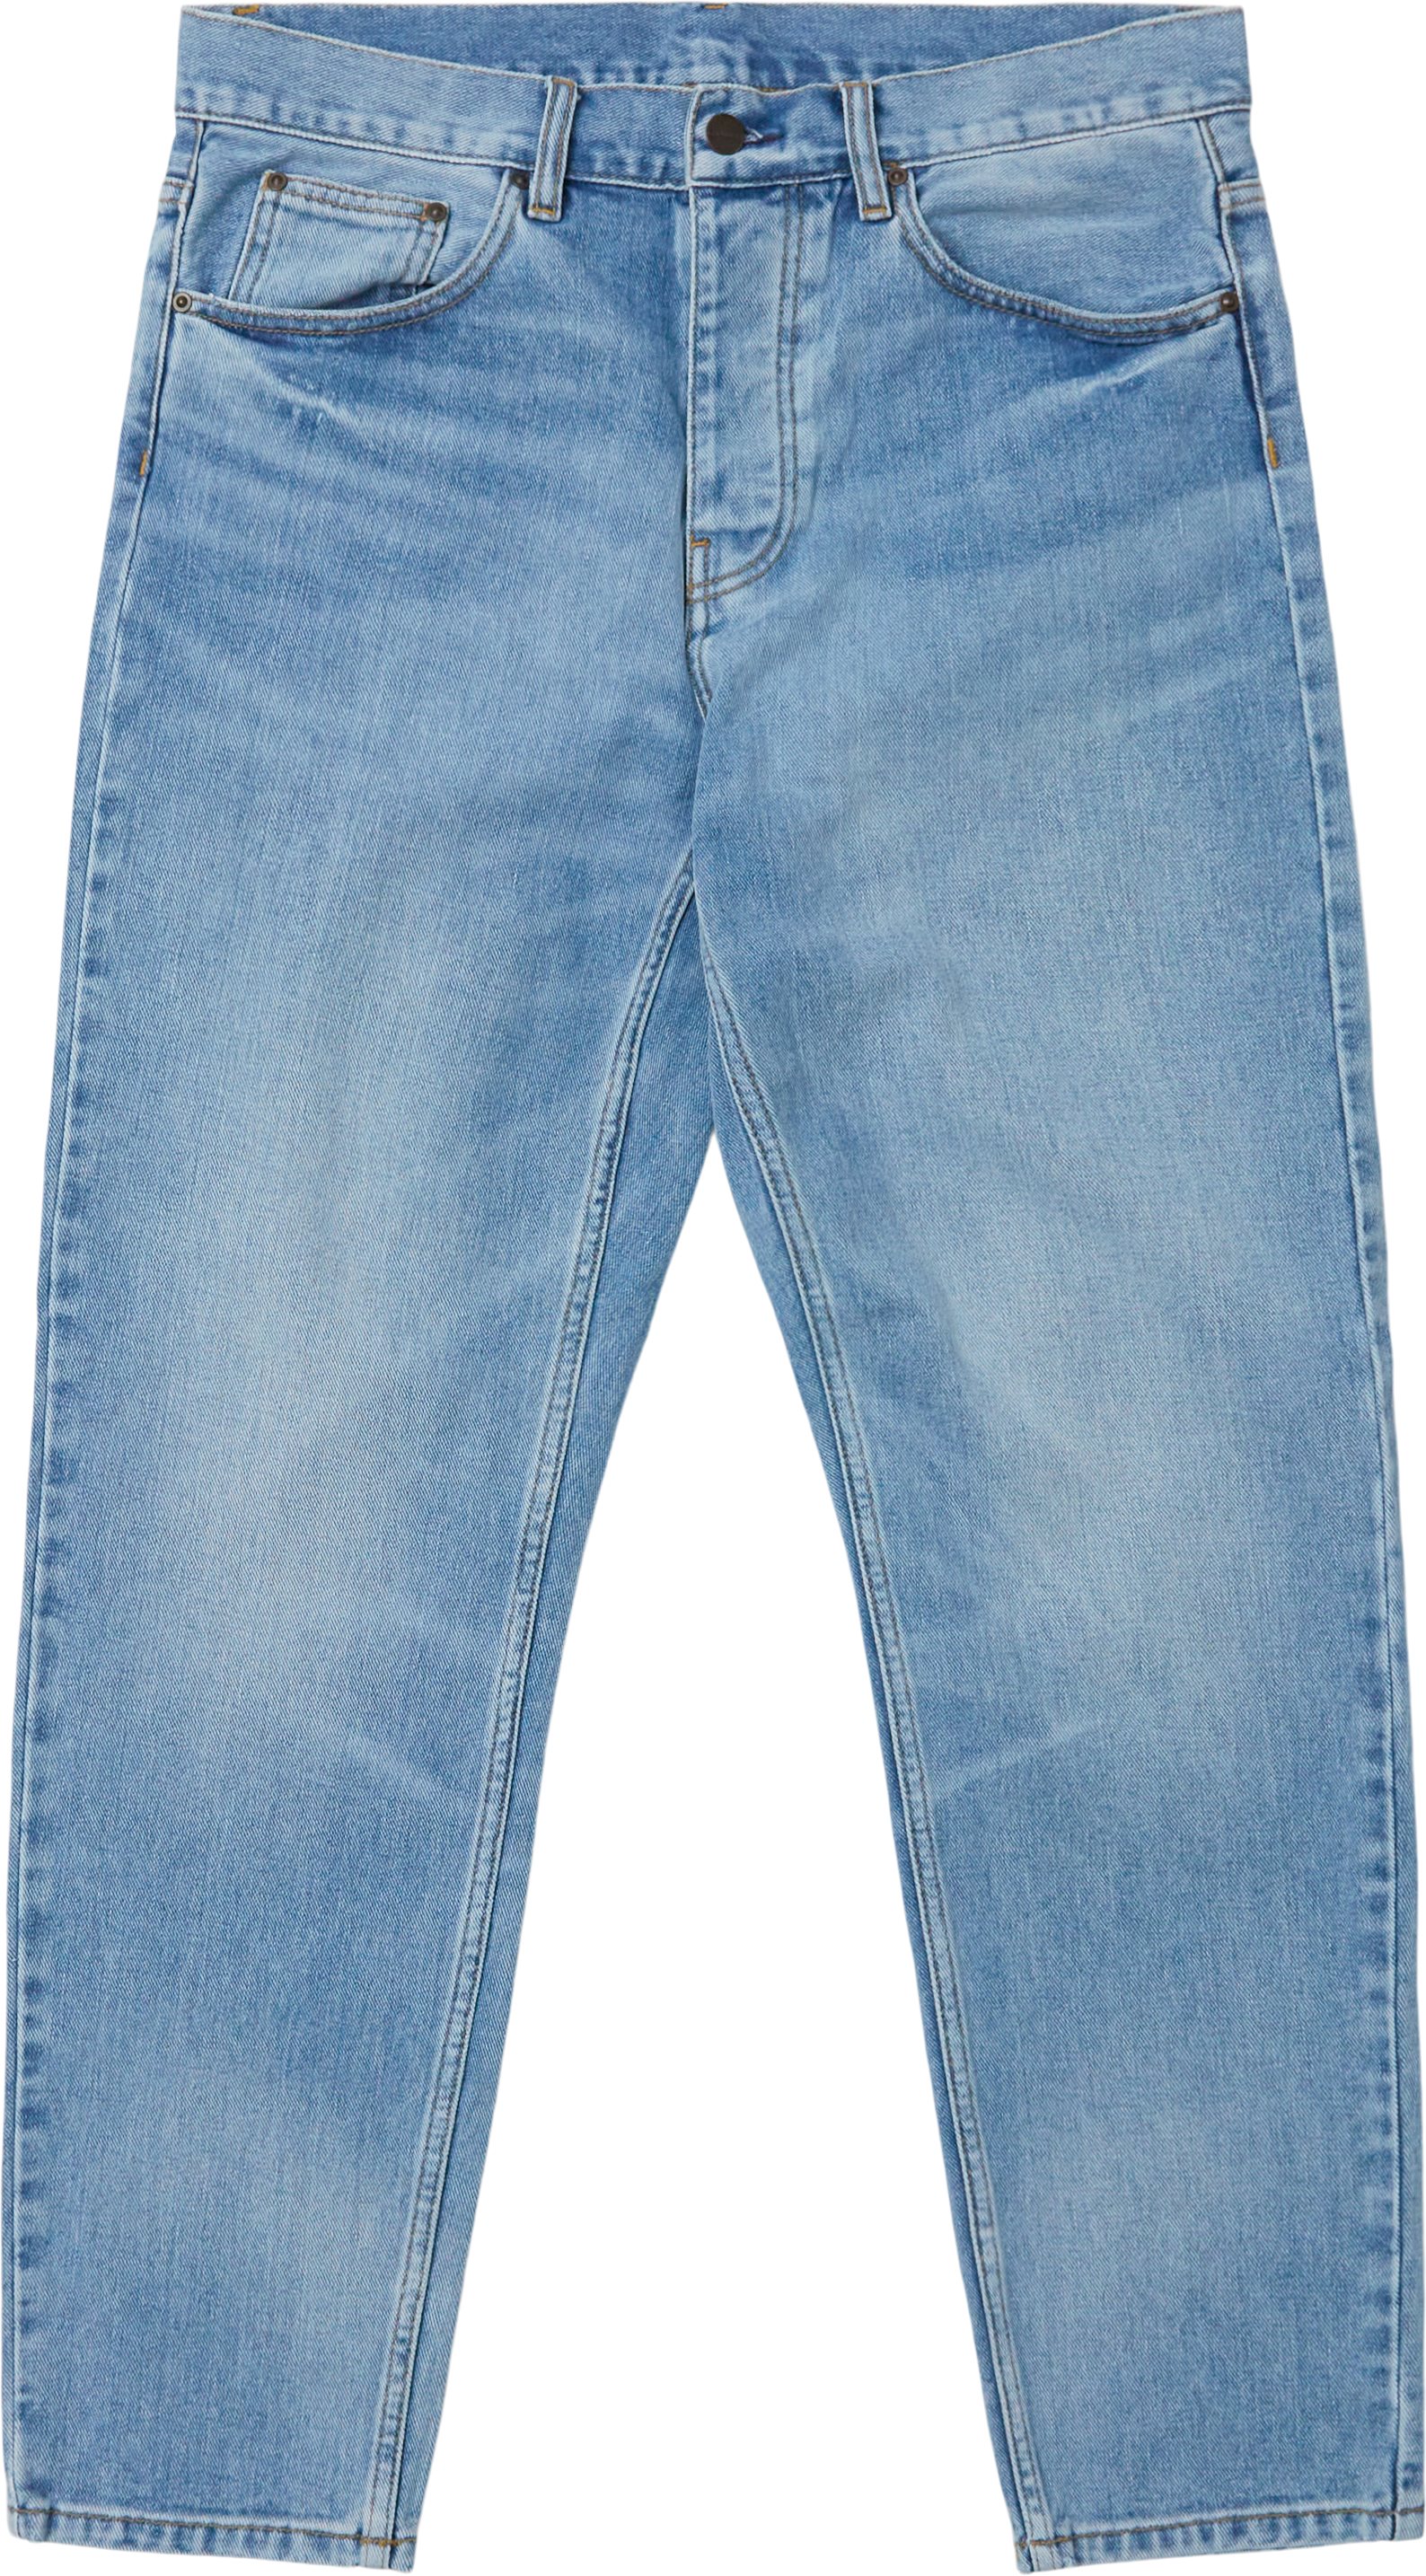 Carhartt WIP Jeans NEWEL I029208.01.WI Denim